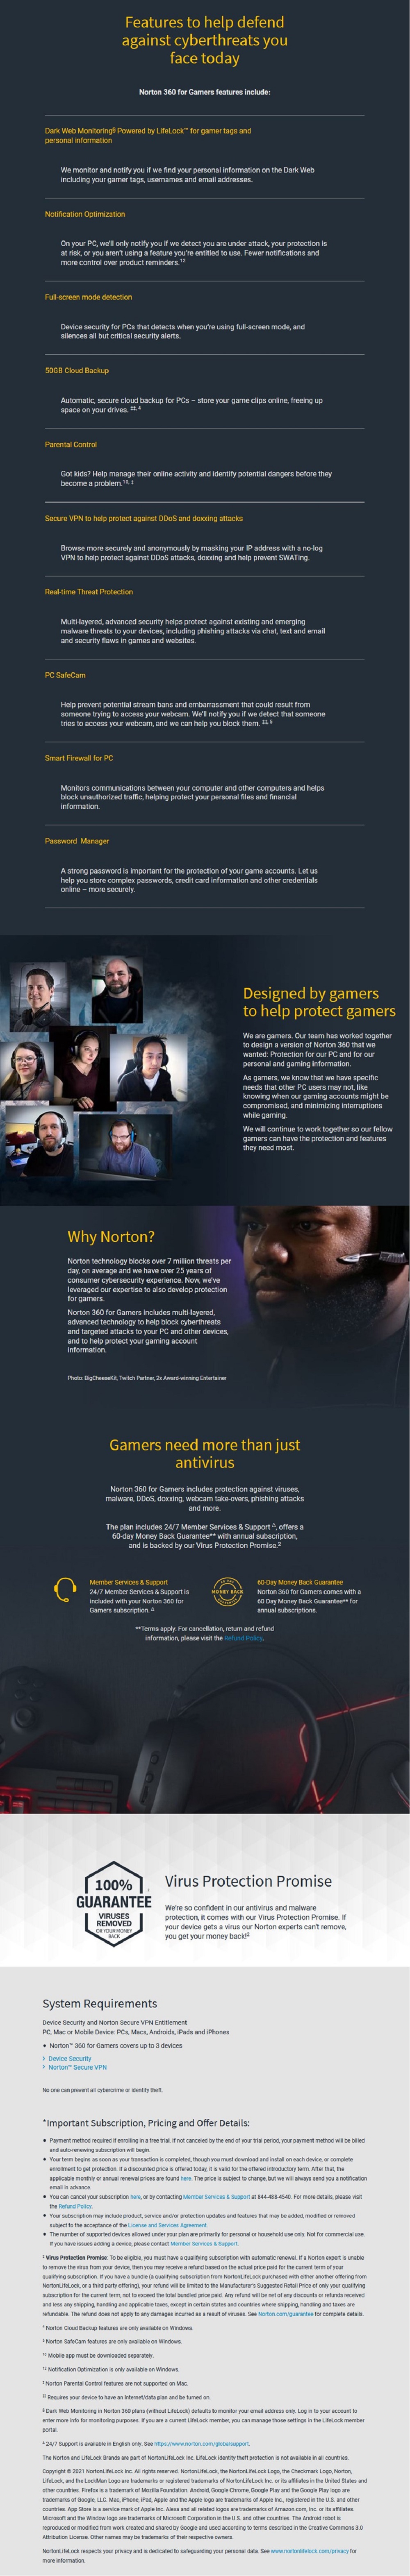 Norton Gamers